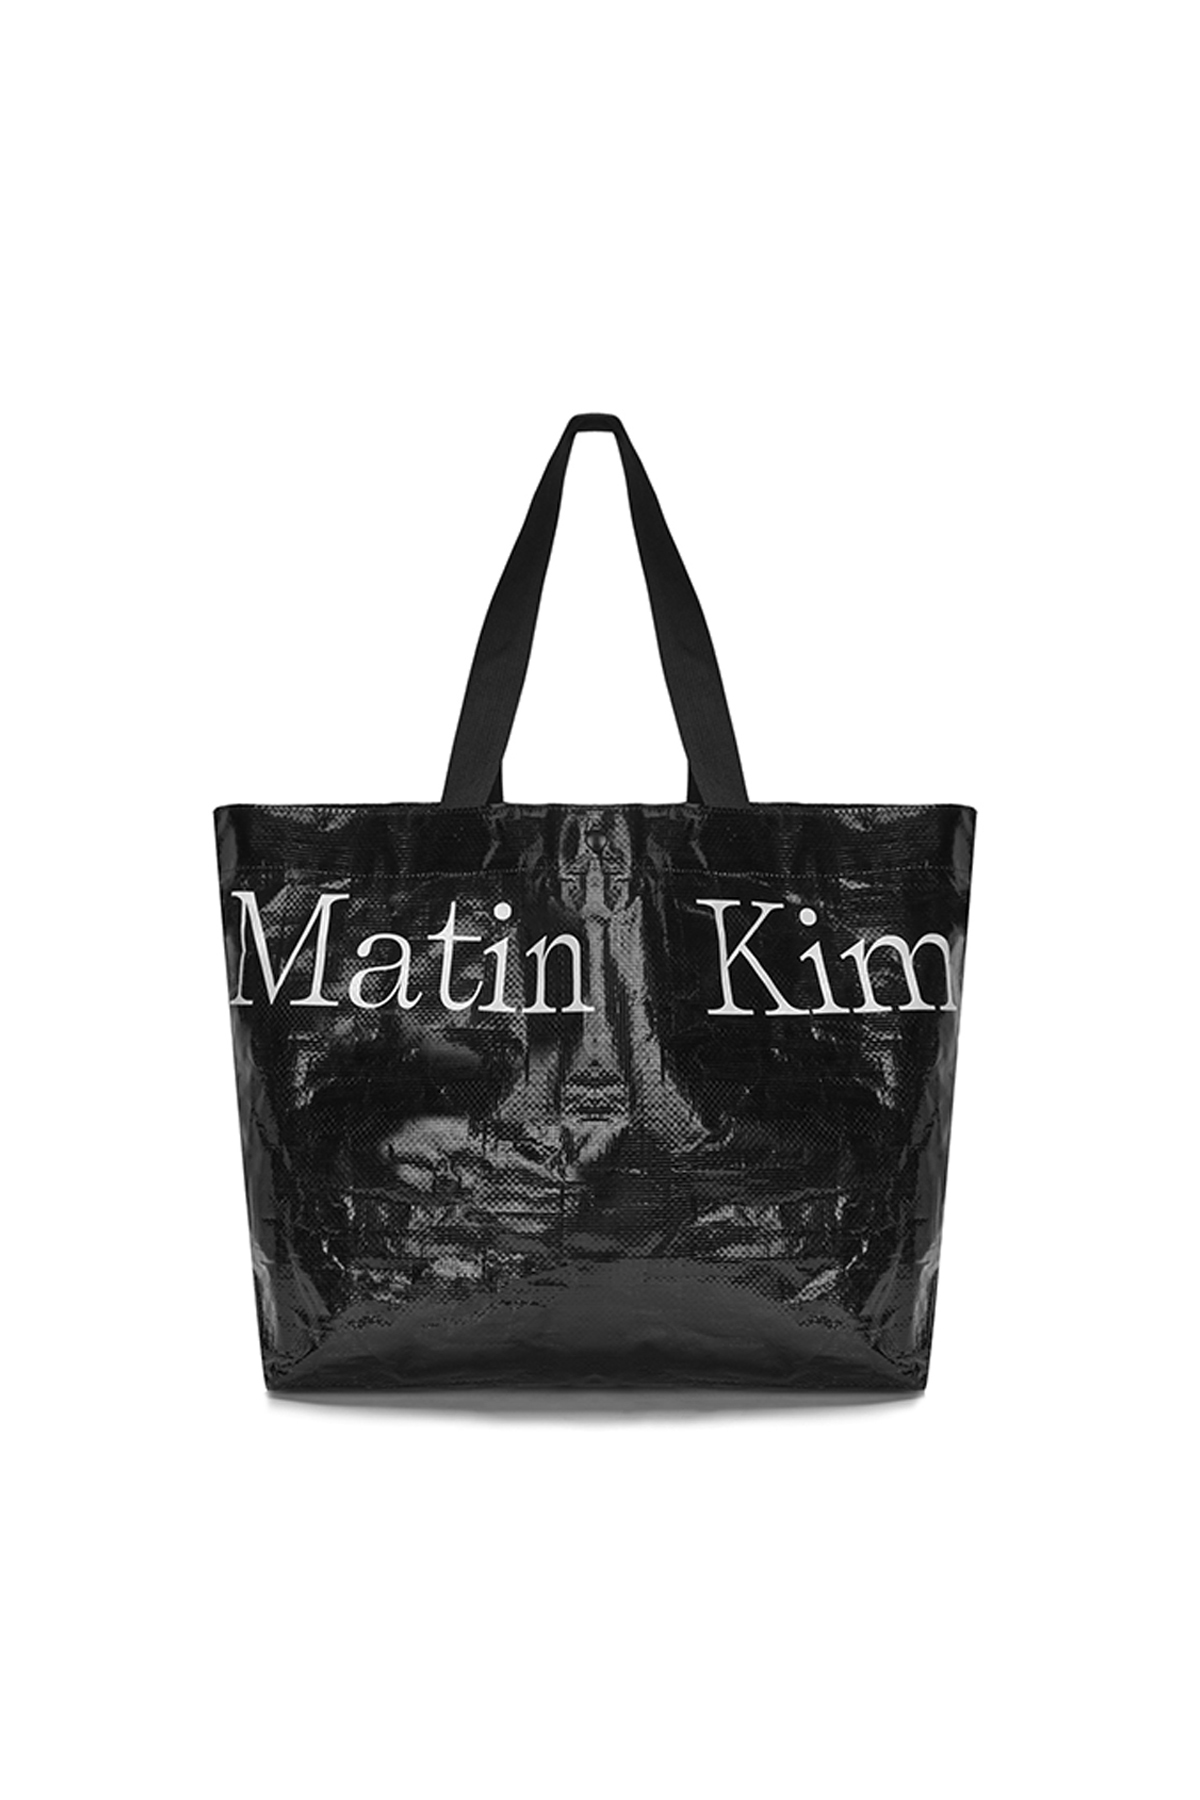 Shop Matin Kim Unisex Street Style Plain Shoulder Bags by enjoy-fashion